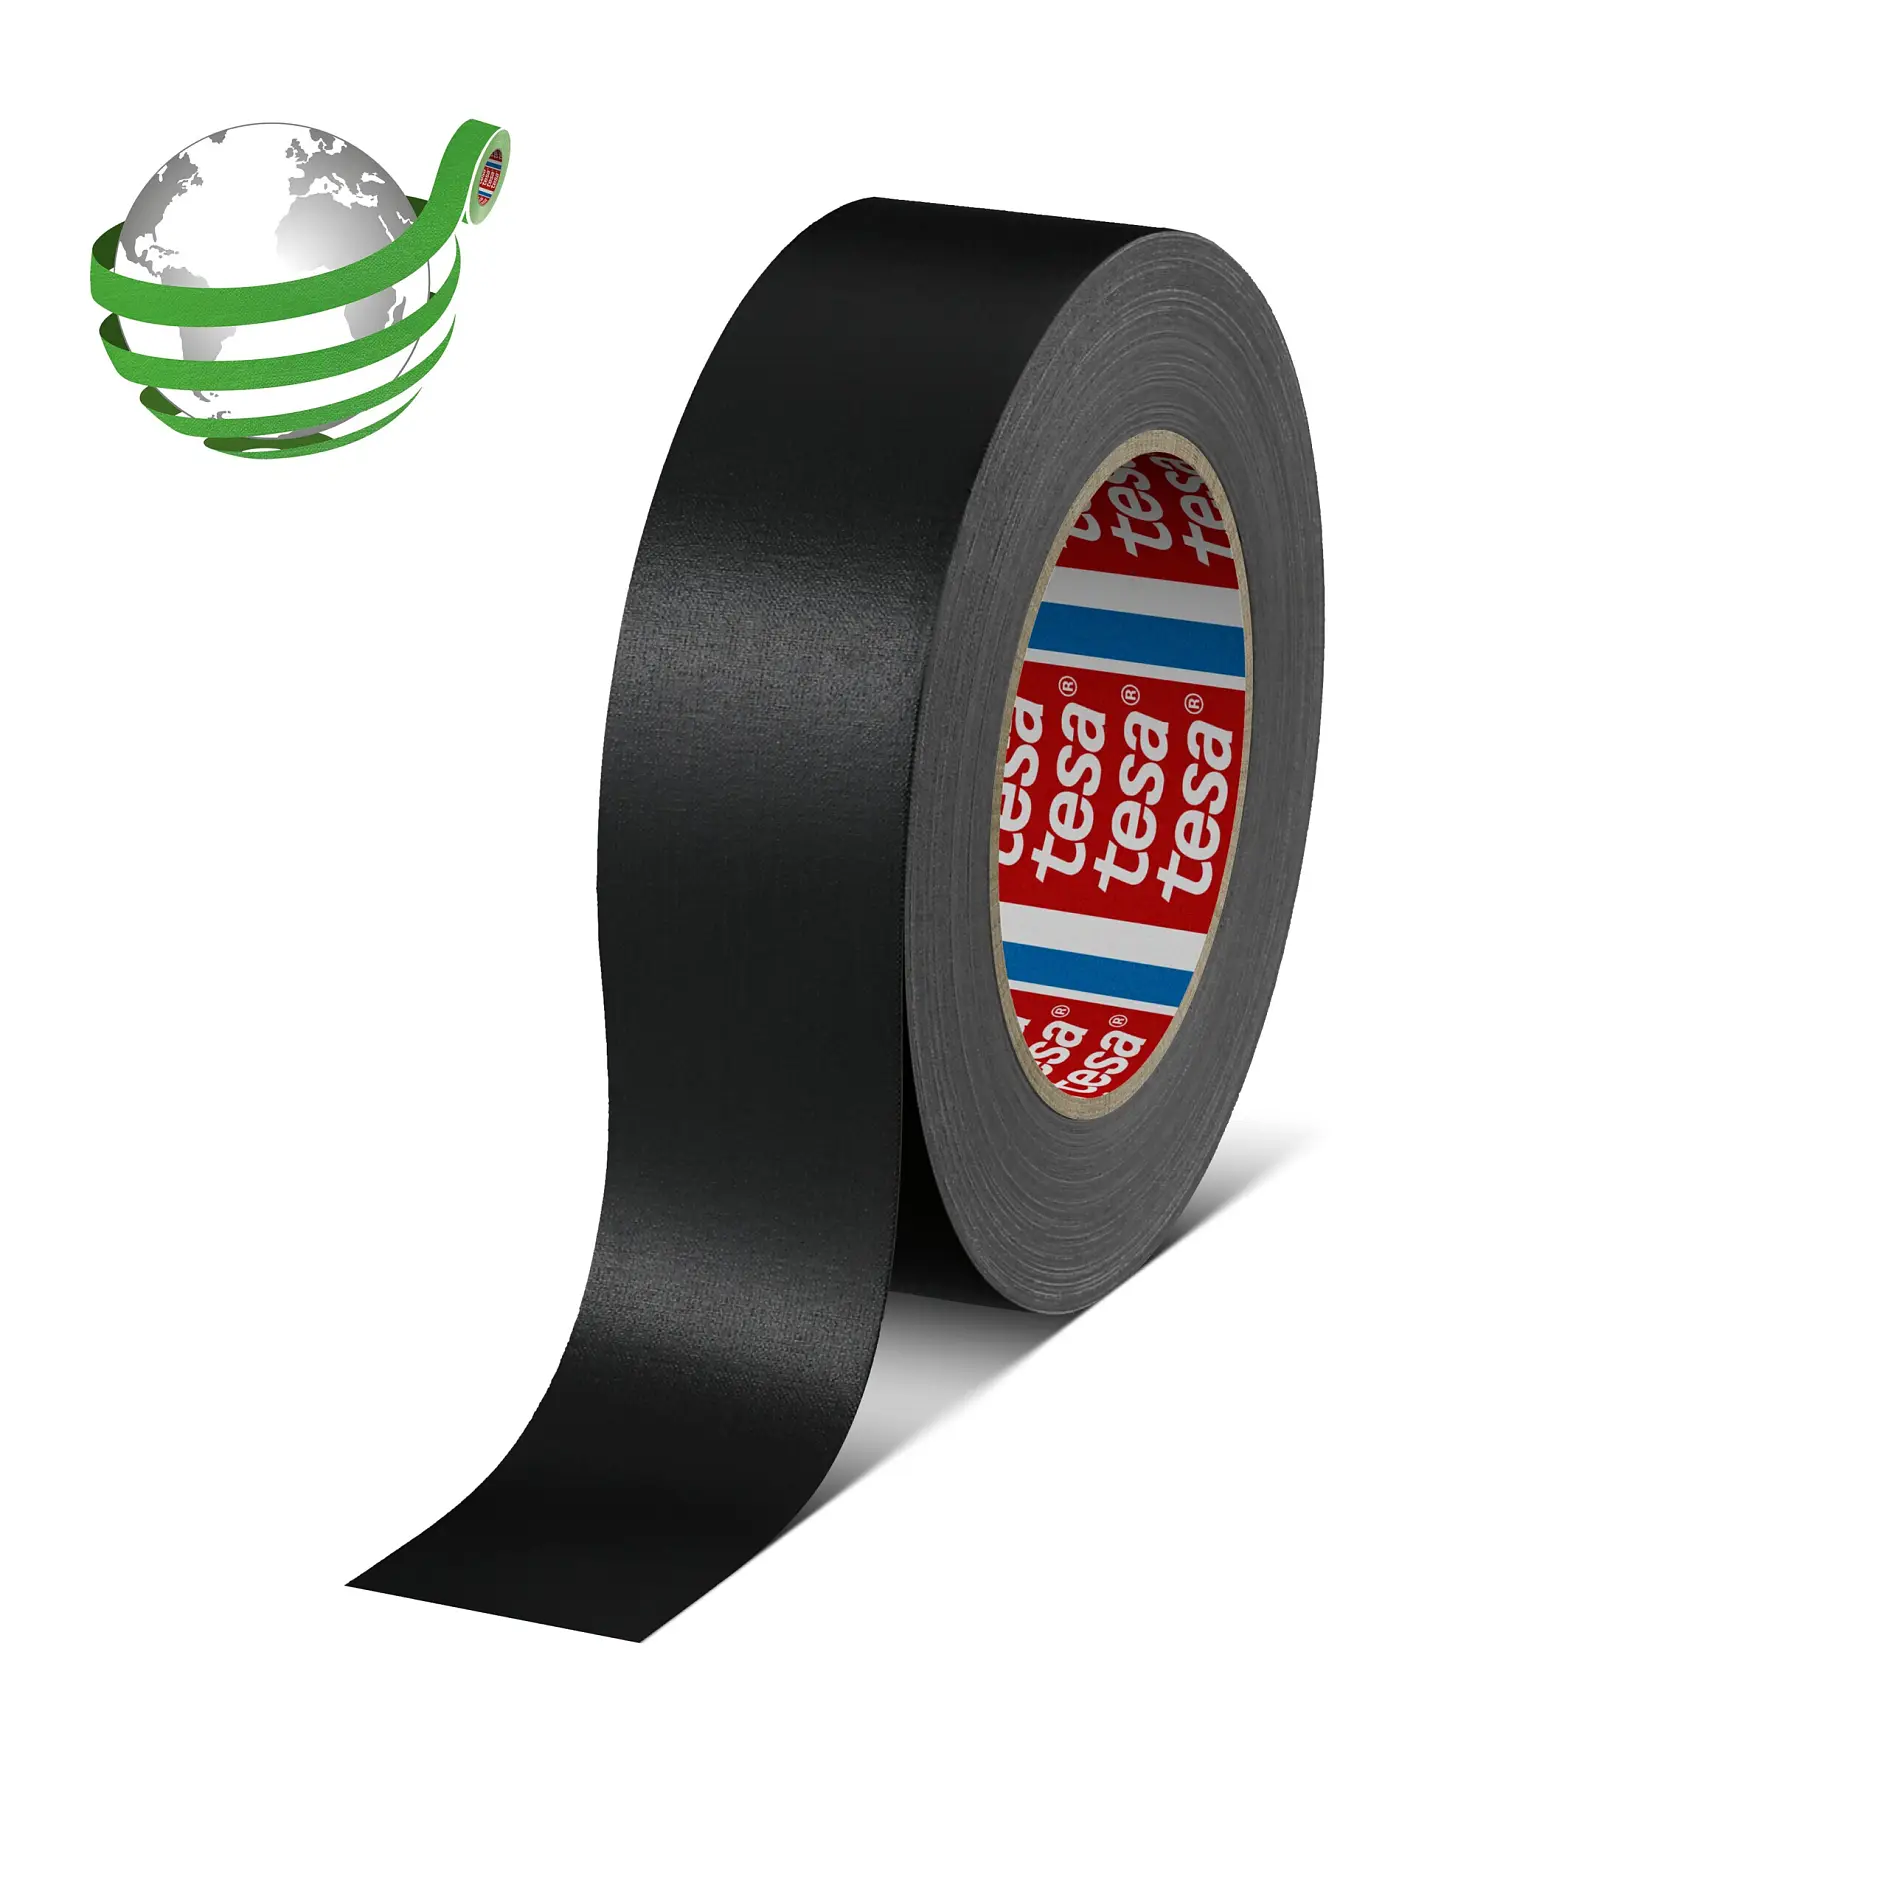 tesa-4651-premium-colored-cloth-tape-black-046510001300-pr-with-marker